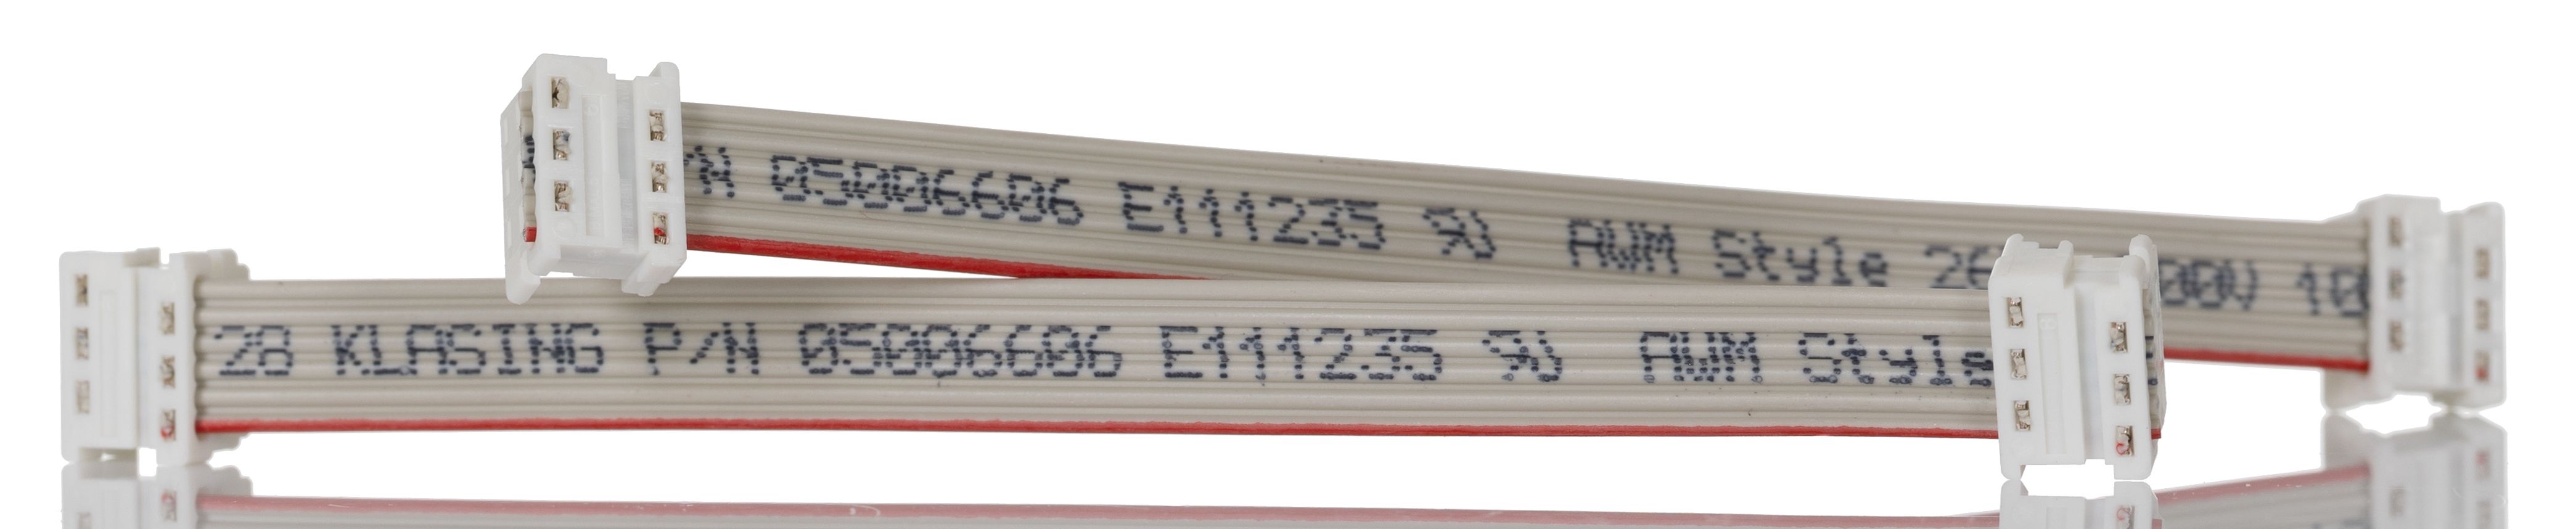 Molex 1.27mm 6 Way Female Picoflex IDC to Female Picoflex IDC Flat Ribbon Cable, 100mm Length